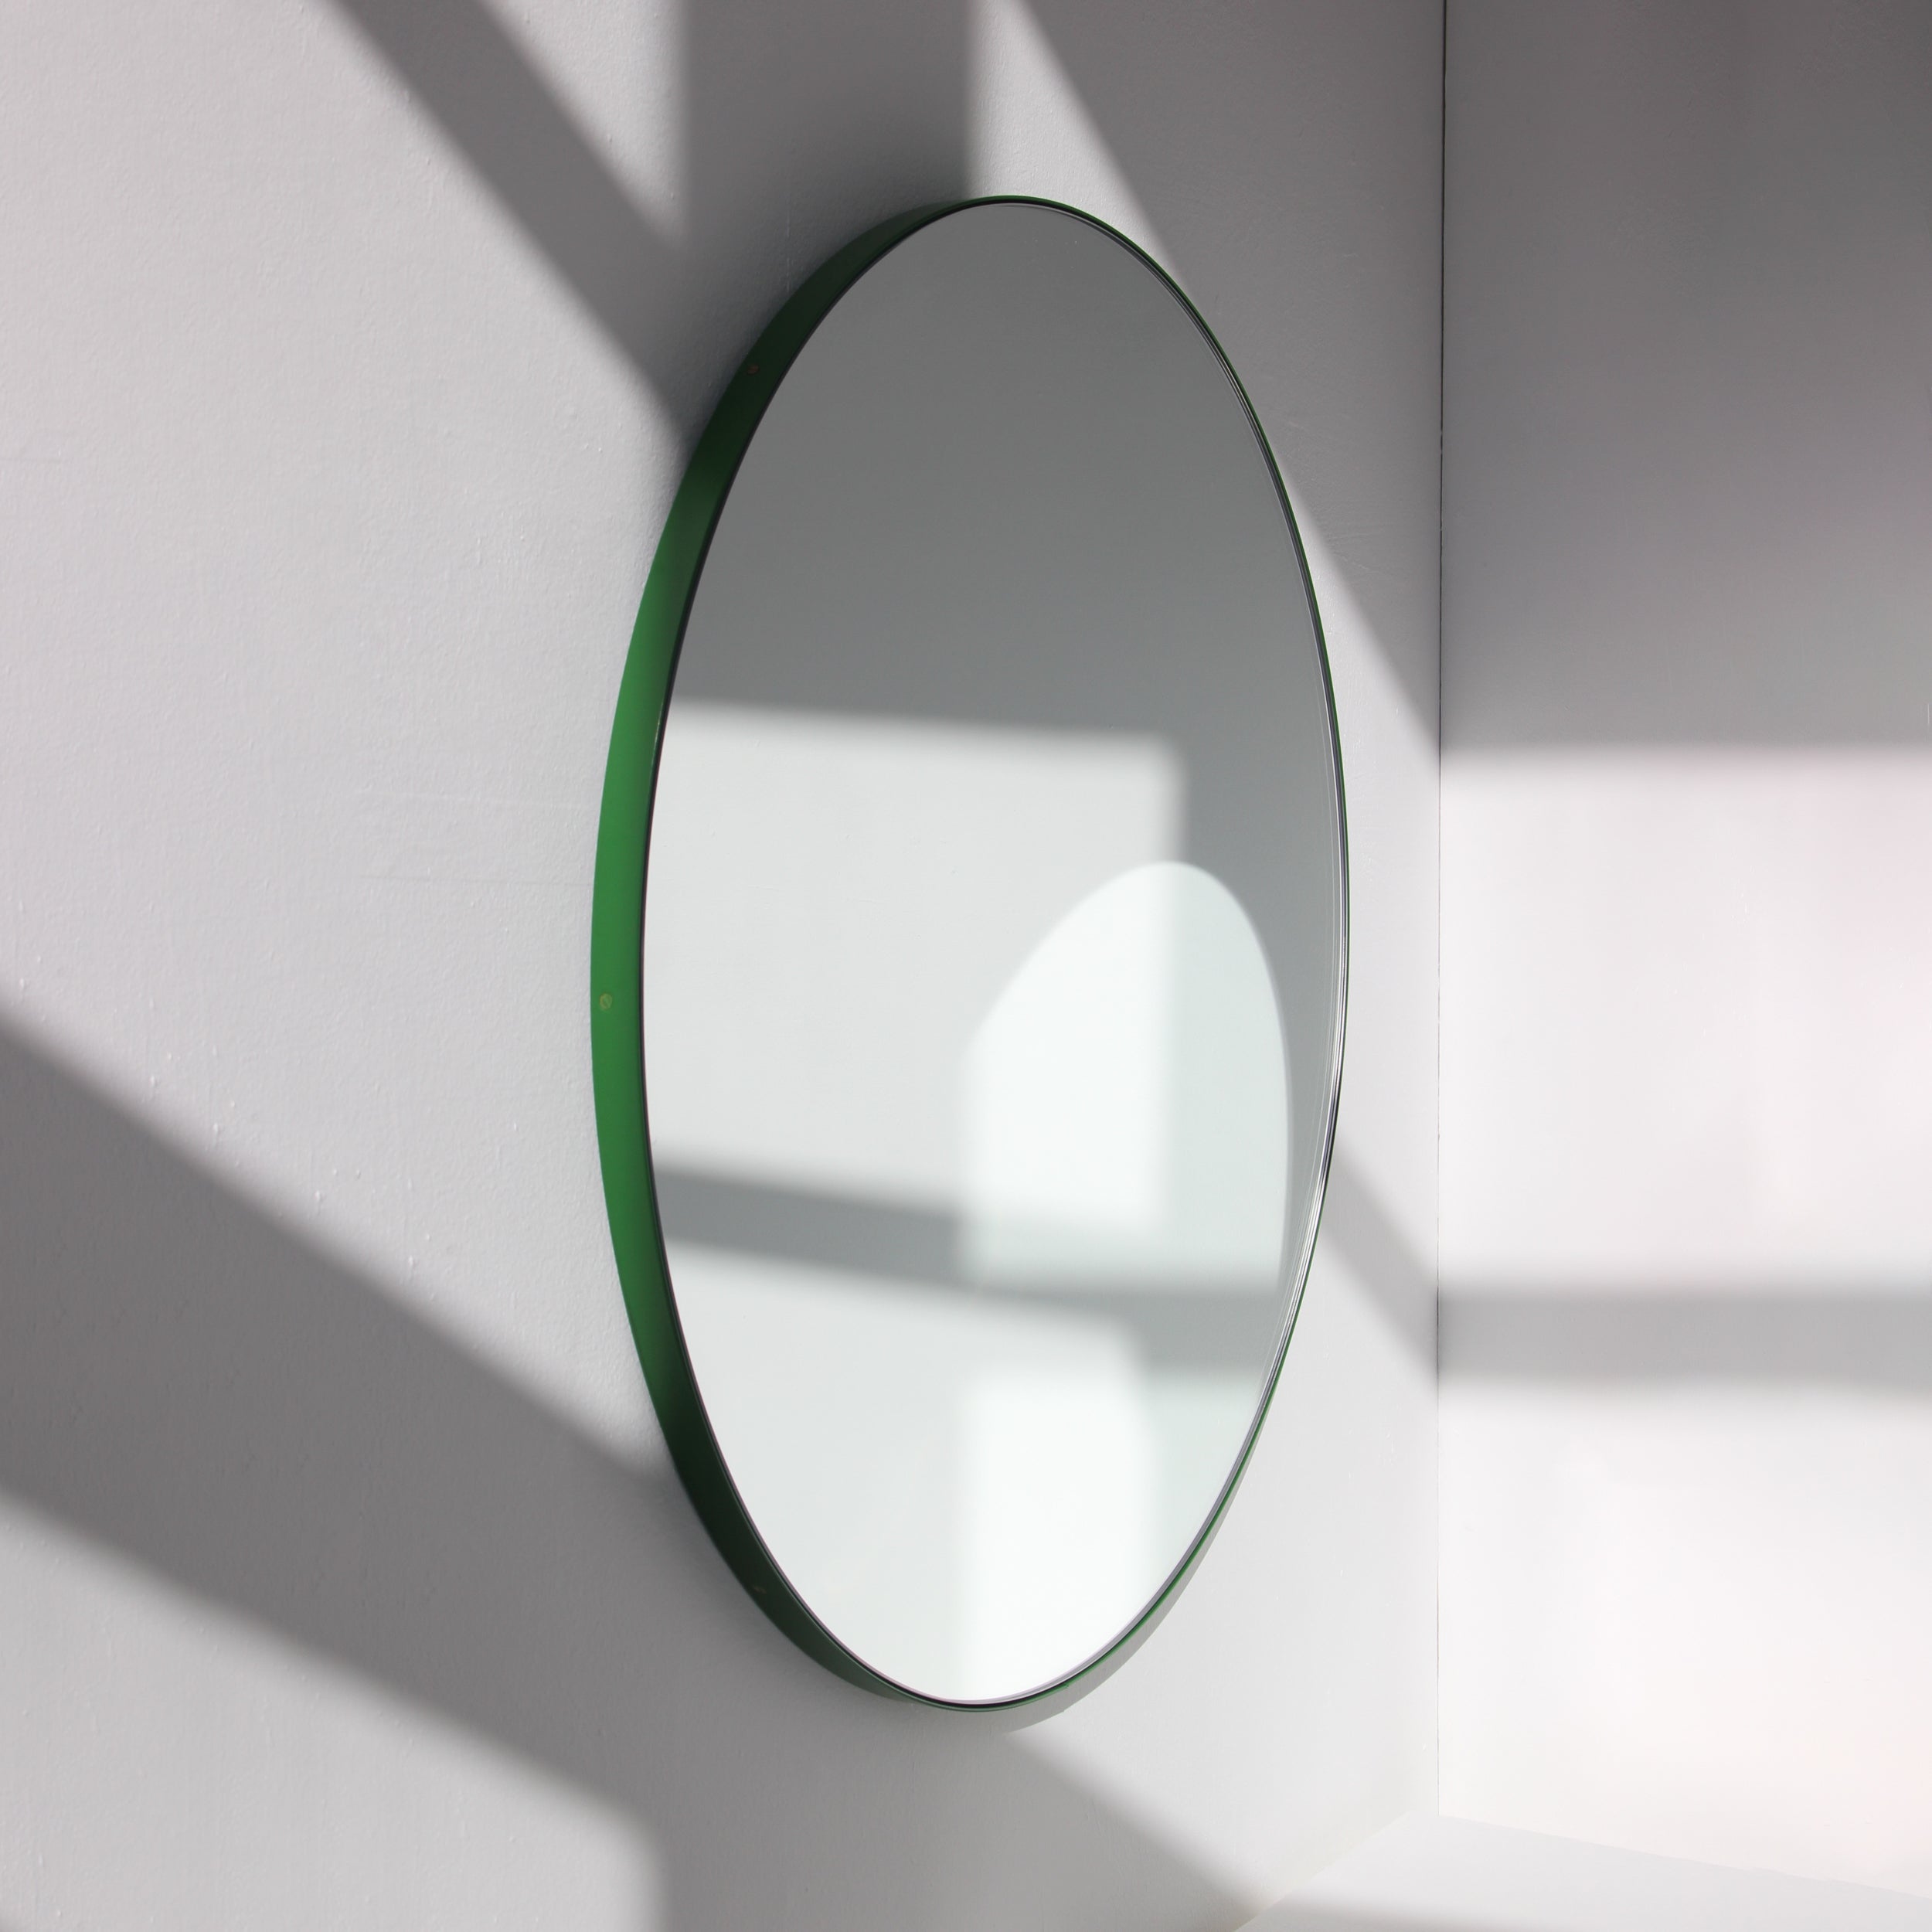 Miroir rond moderniste et minimaliste Orbis avec cadre vert, XL en vente